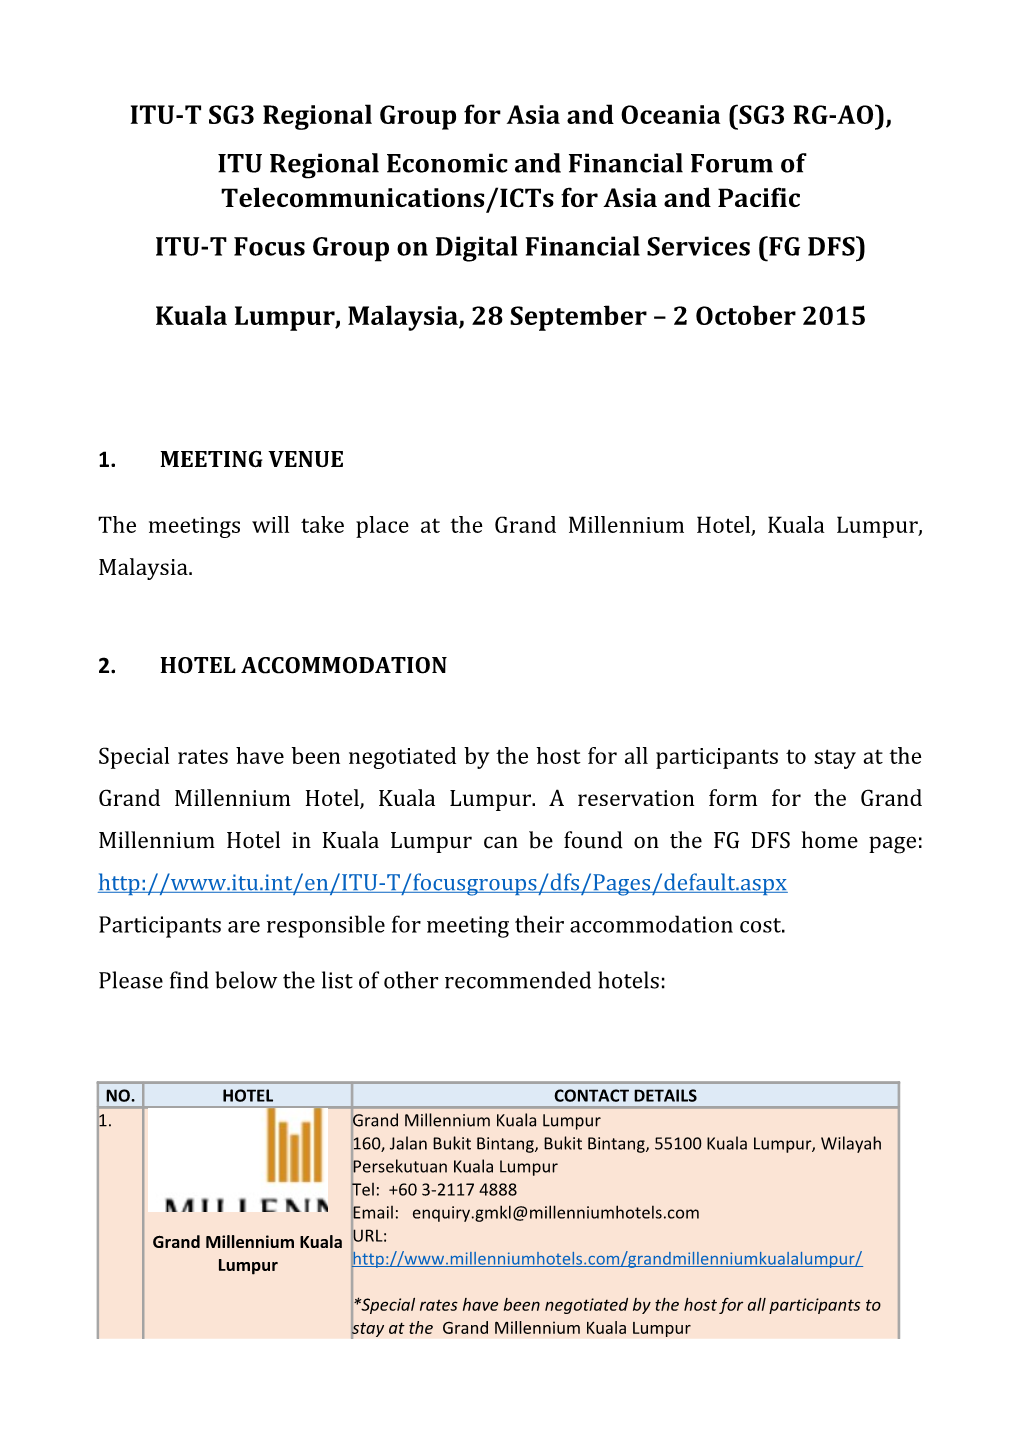 ITU-T SG3 Regional Group for Asia and Oceania (SG3 RG-AO)